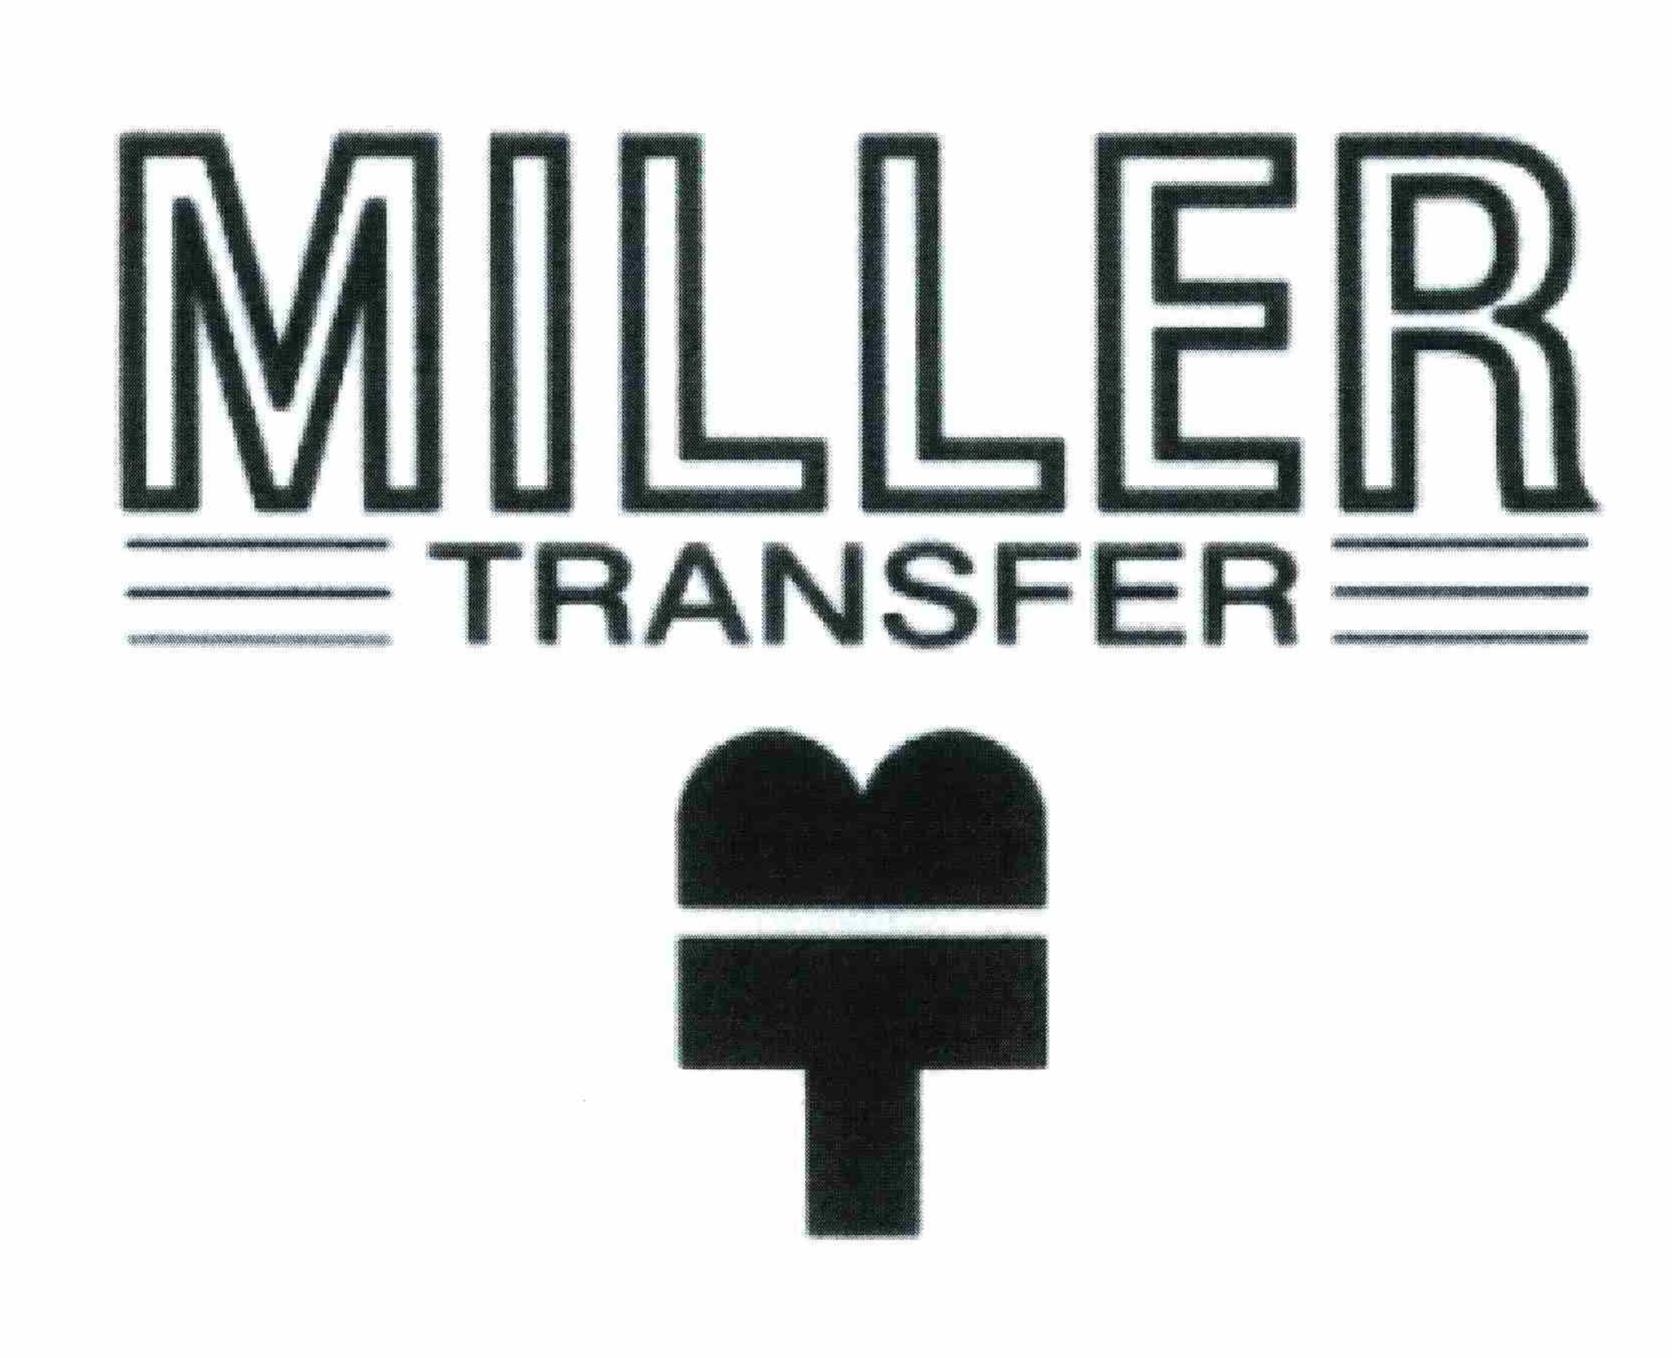  MILLER TRANSFER MT